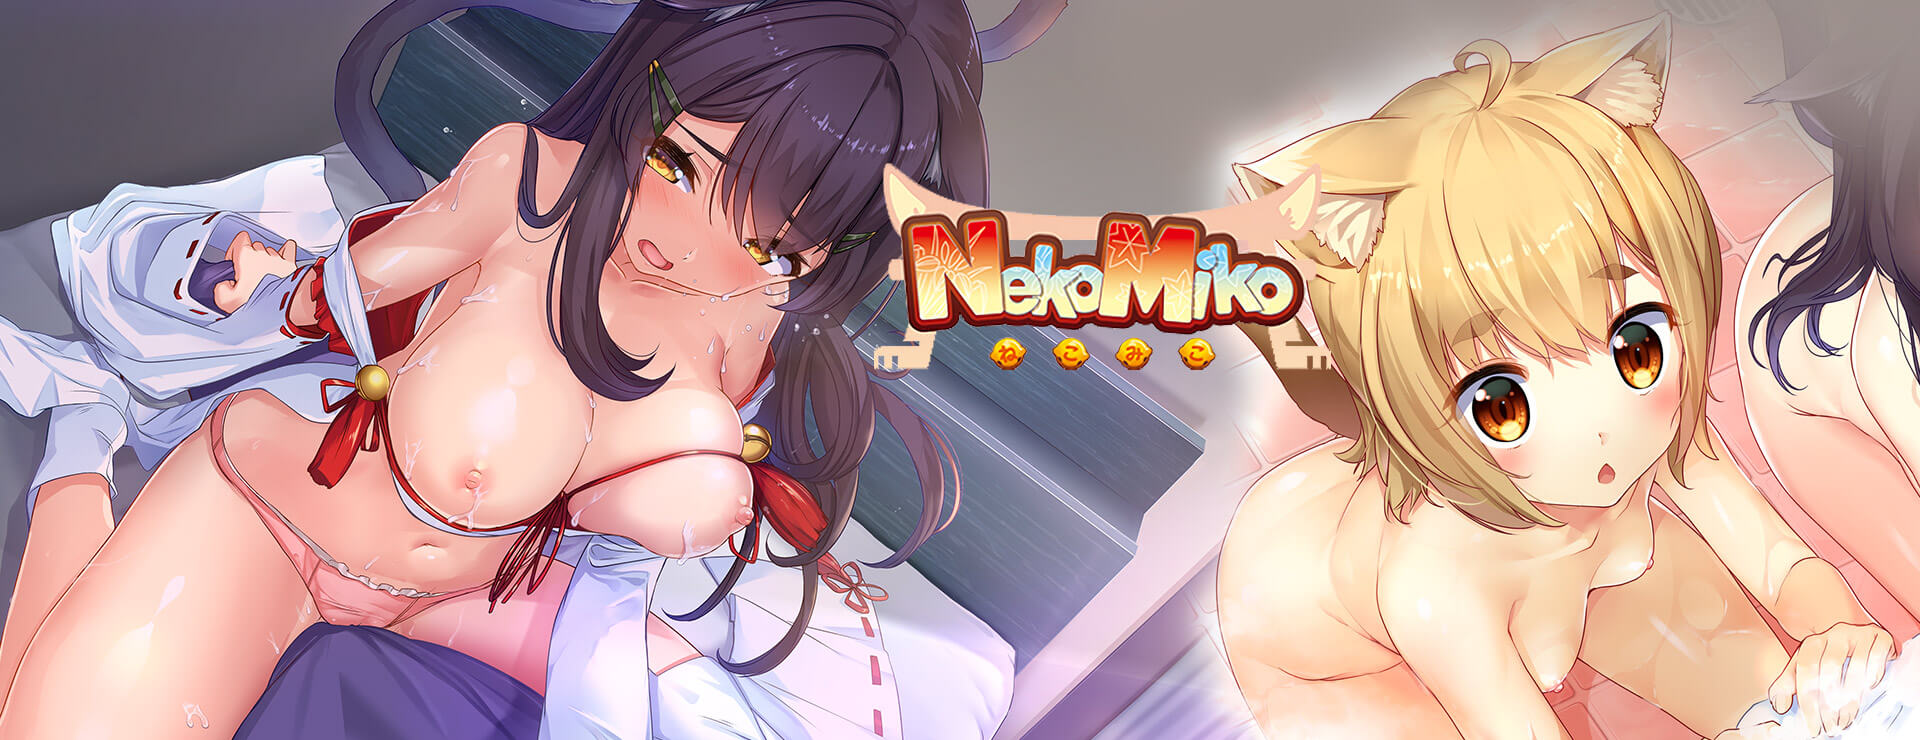 Neko Miko - Visual Novel Game